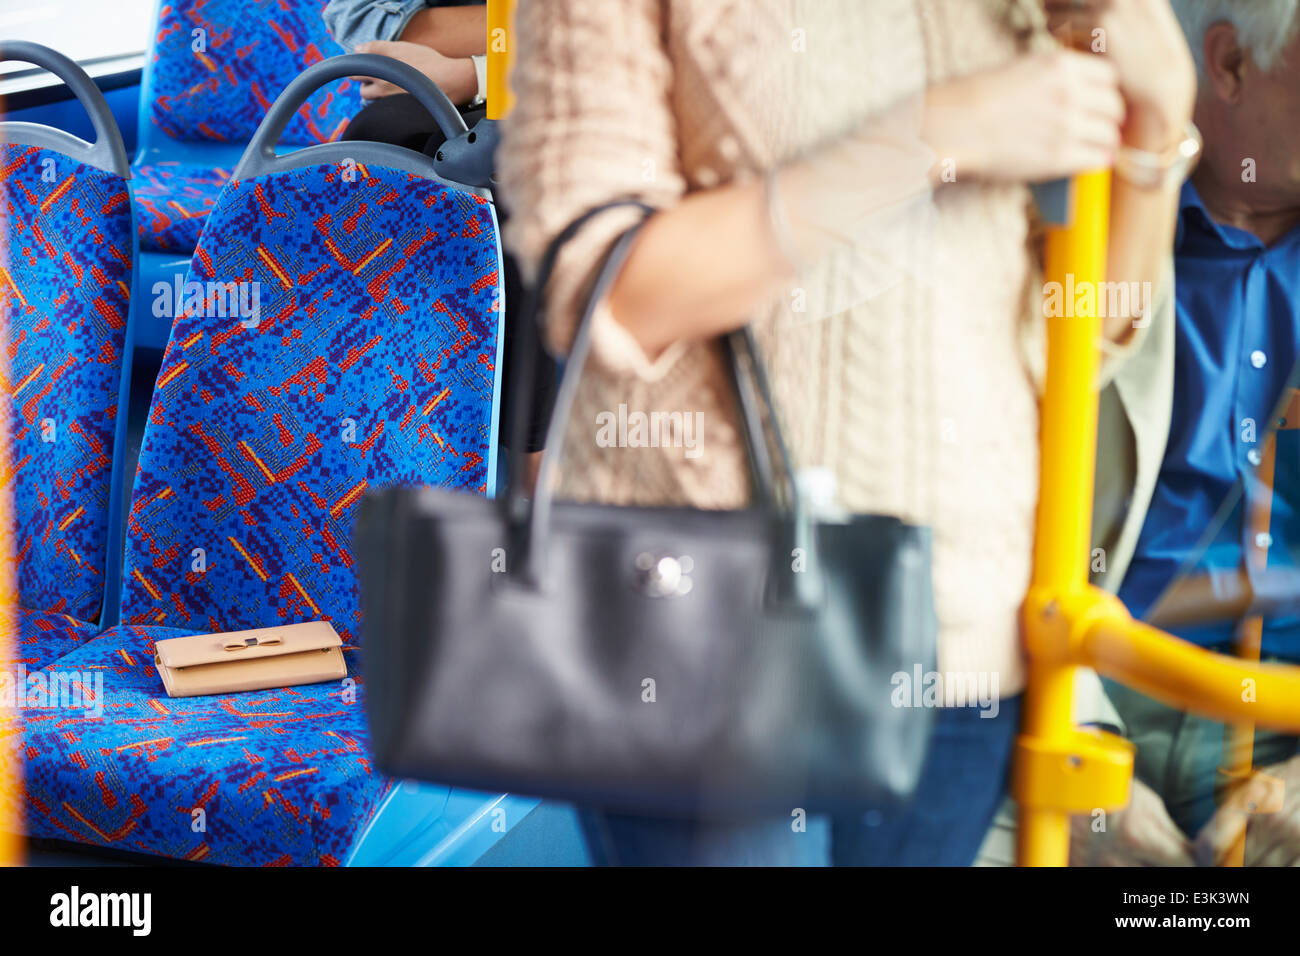 Passenger Leaving Change Purse On Seat Of Bus Stock Photo